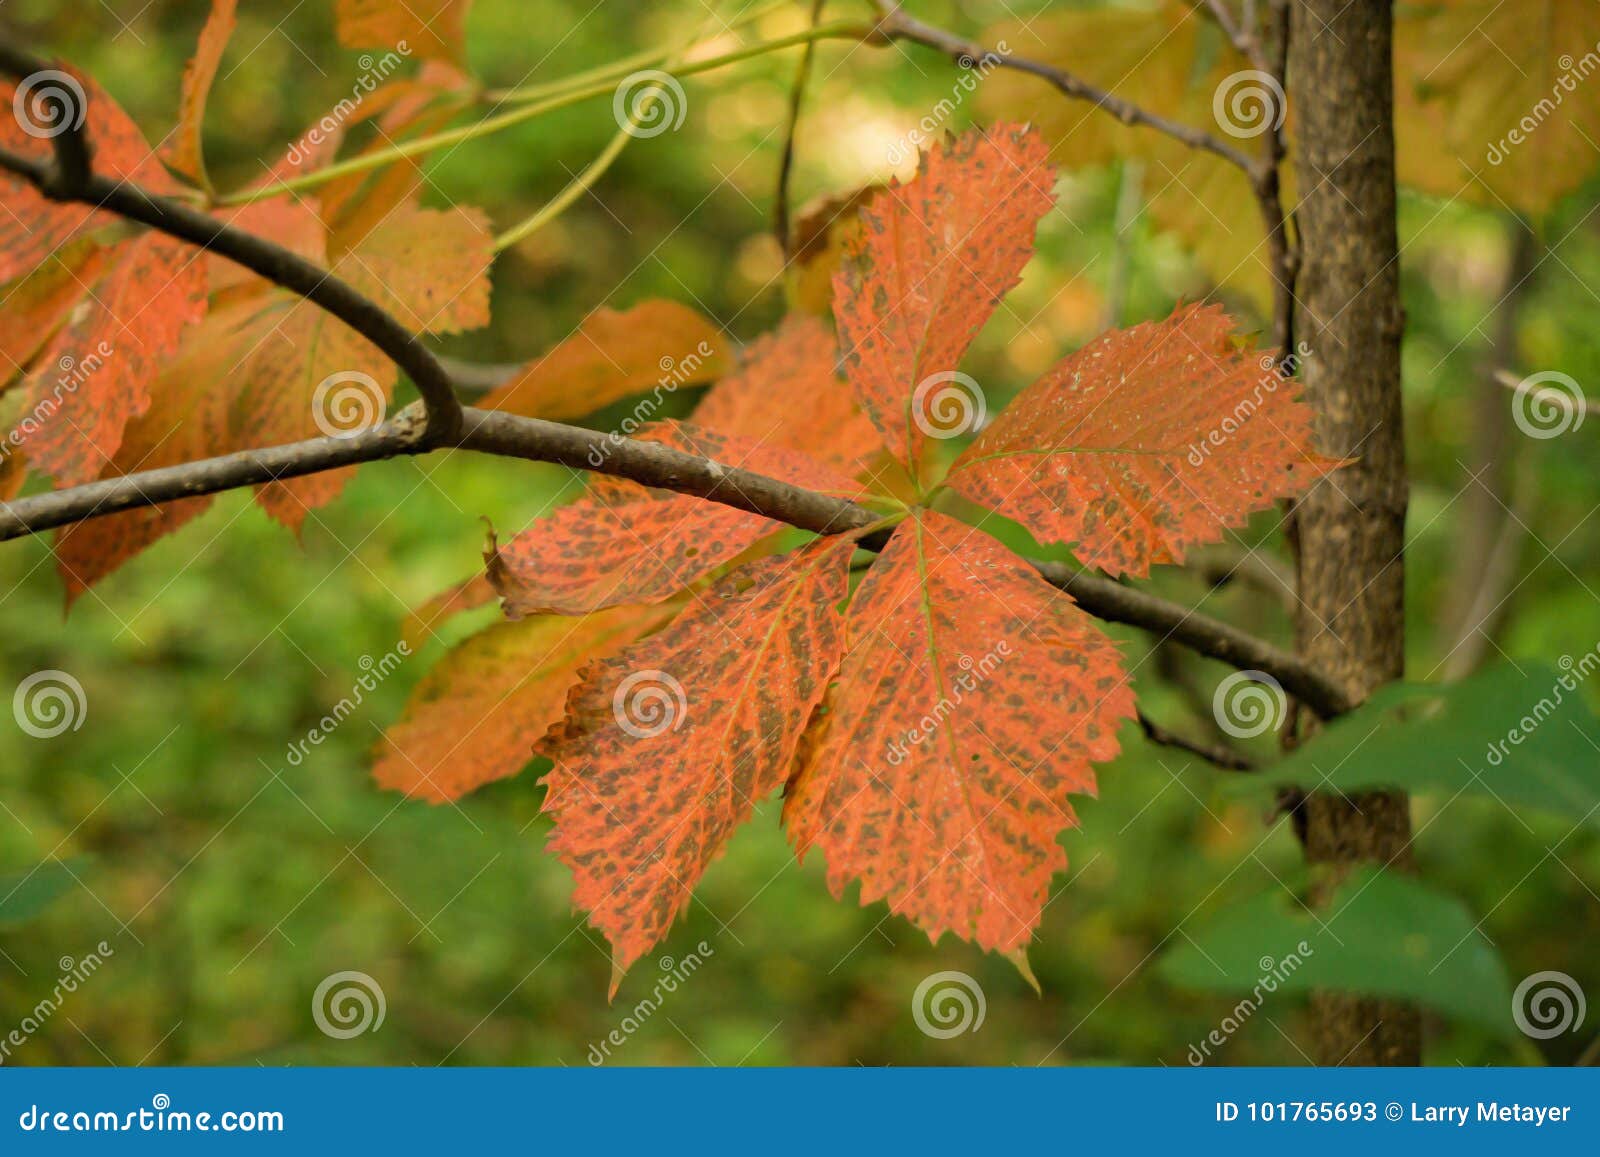 mountain chestnut oak leaves